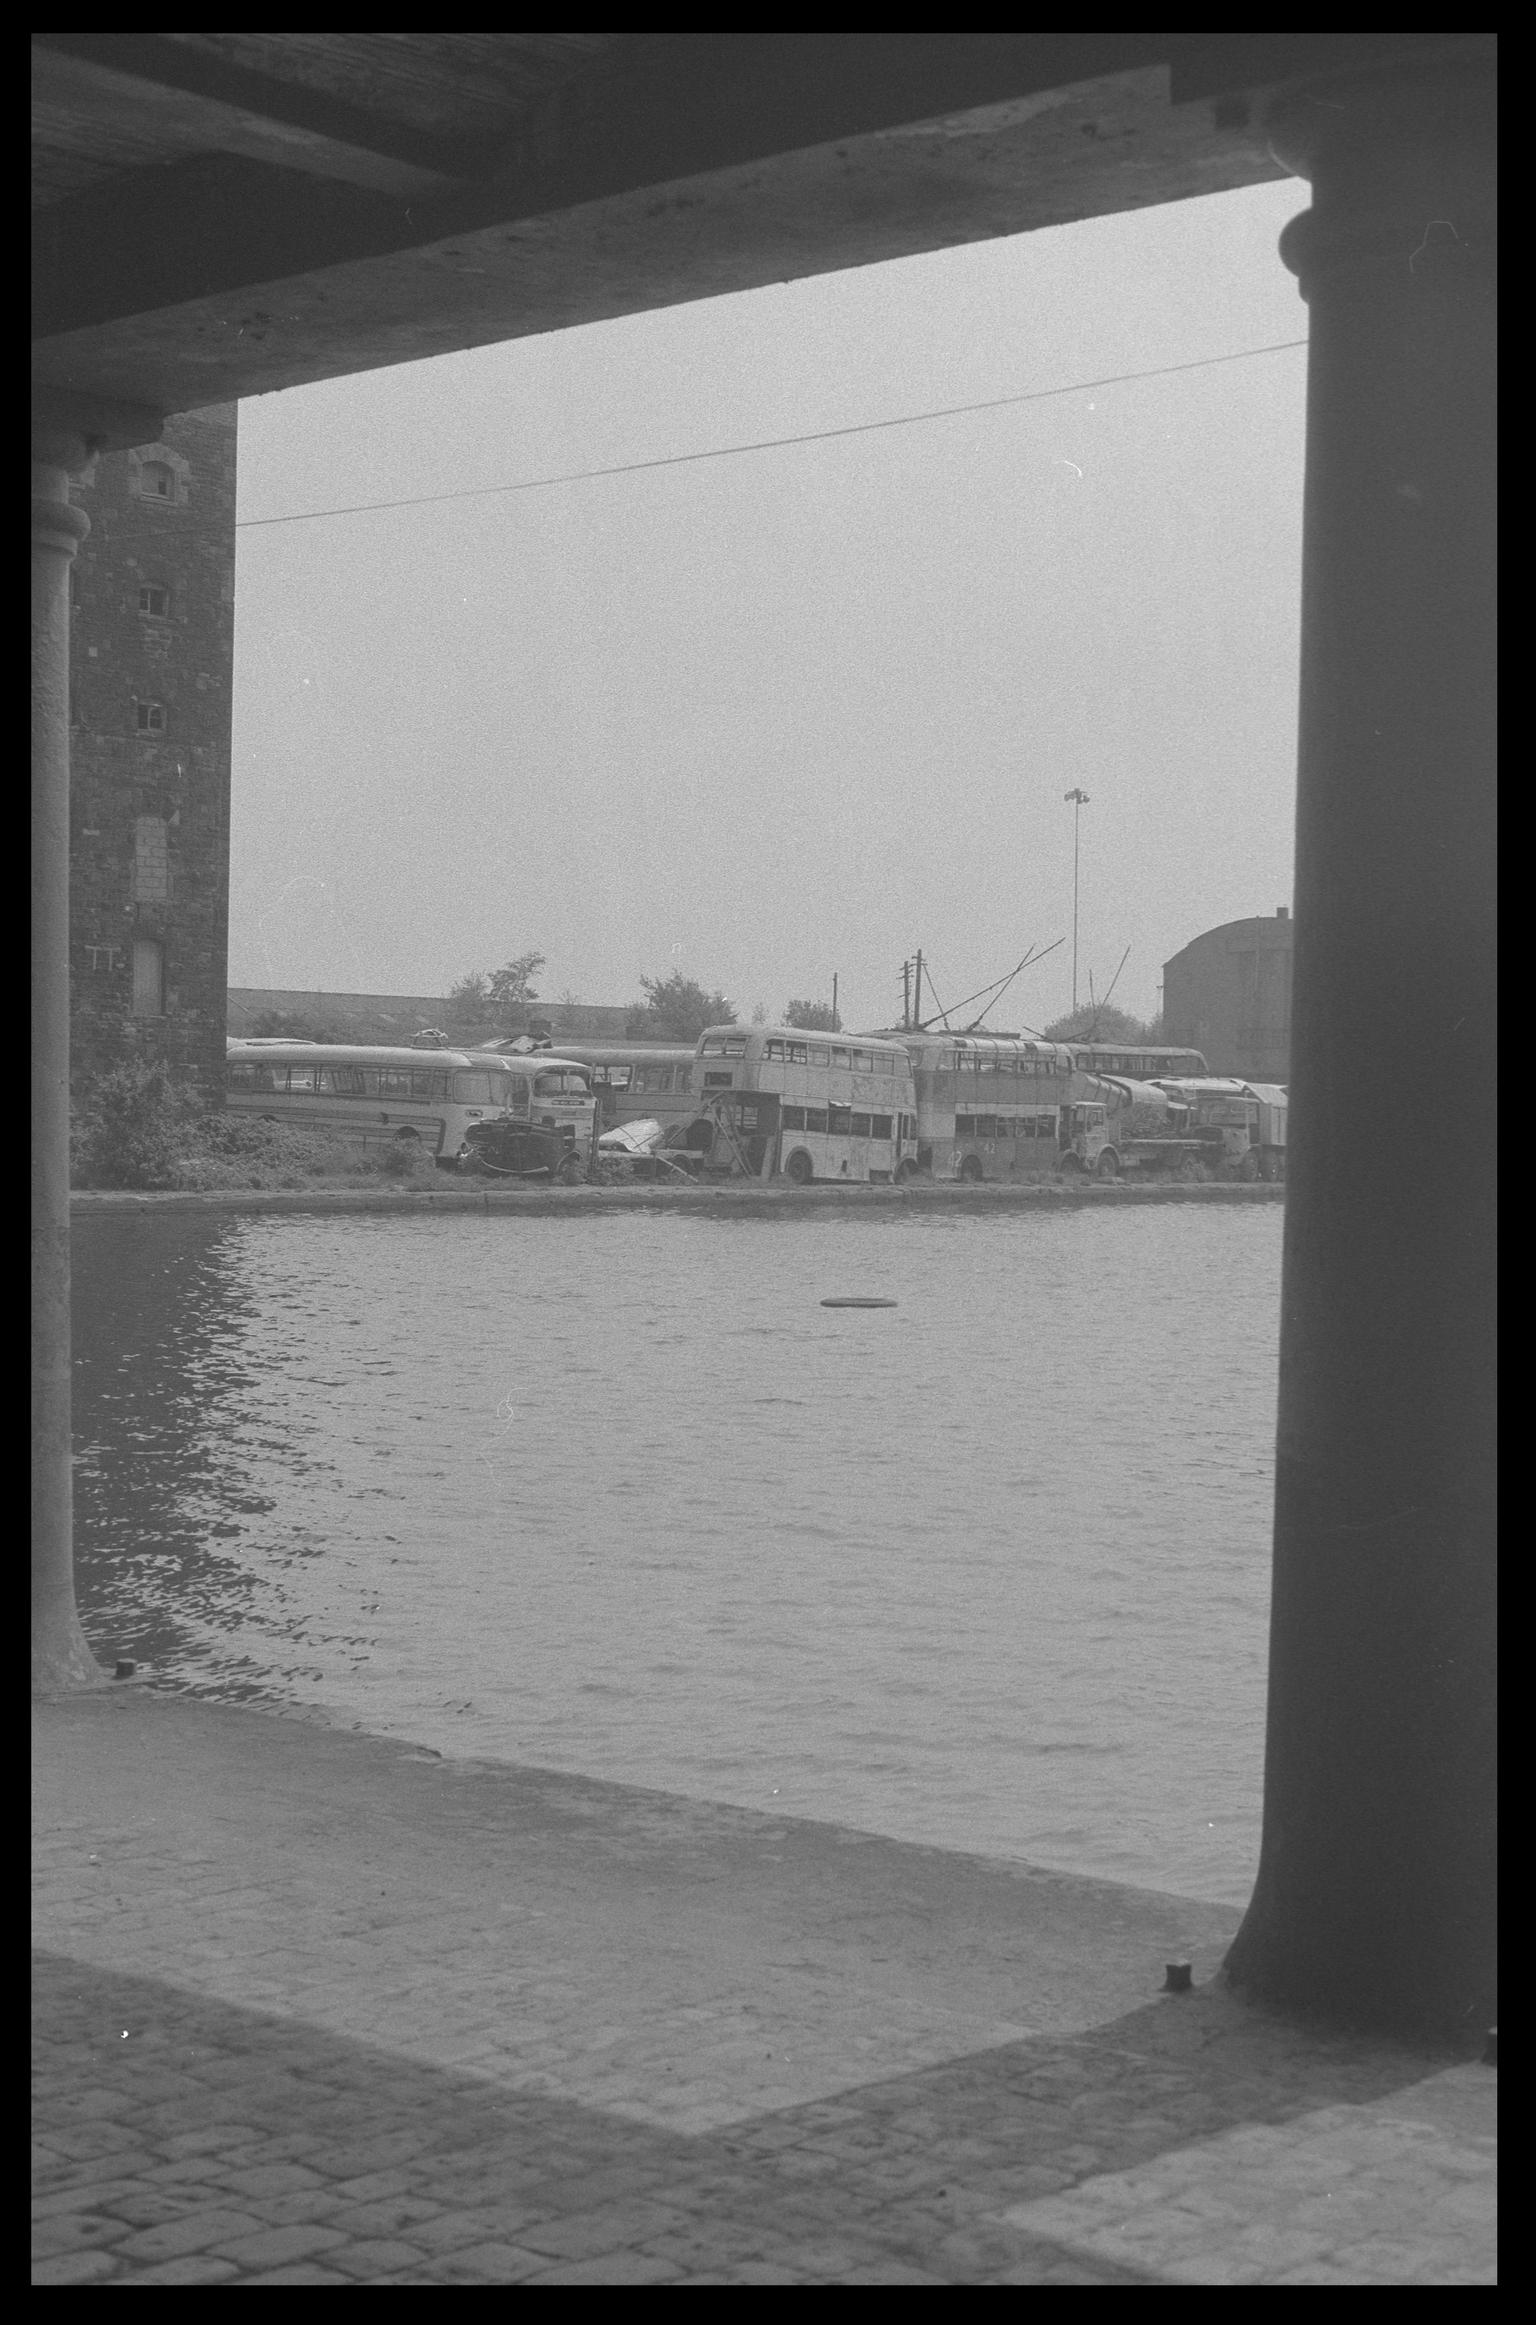 Bute East Dock, Cardiff, negative